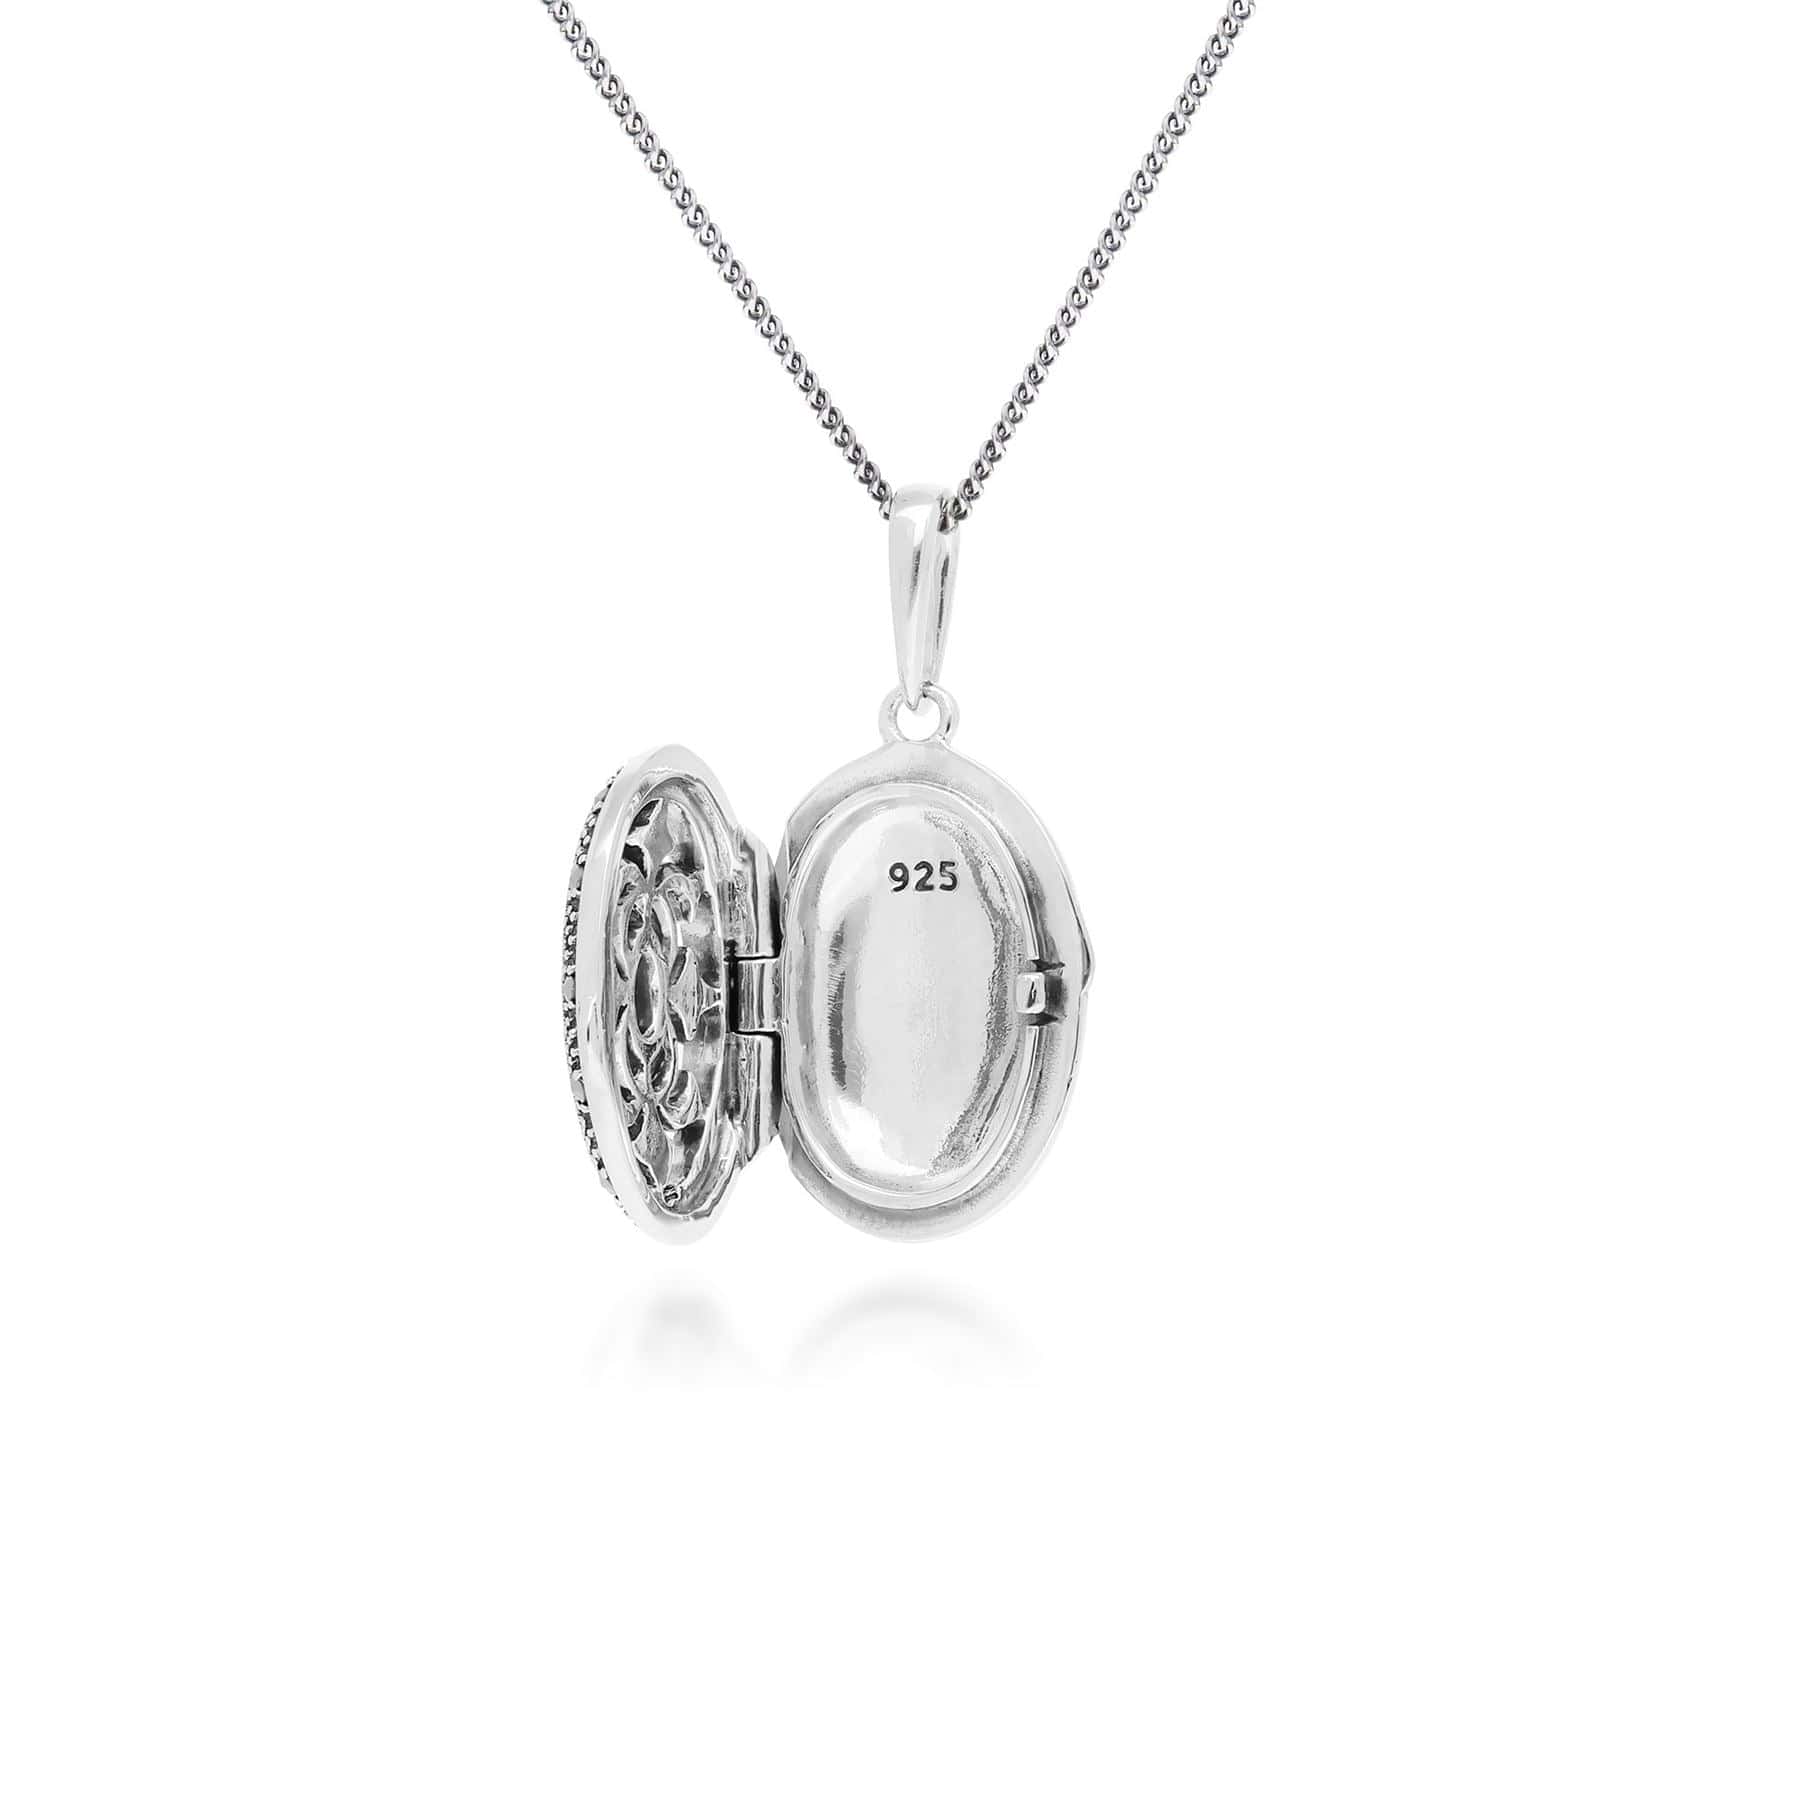 Art Nouveau Style Oval Topaz & Marcasite Locket Necklace in 925 Sterling Silver - Gemondo